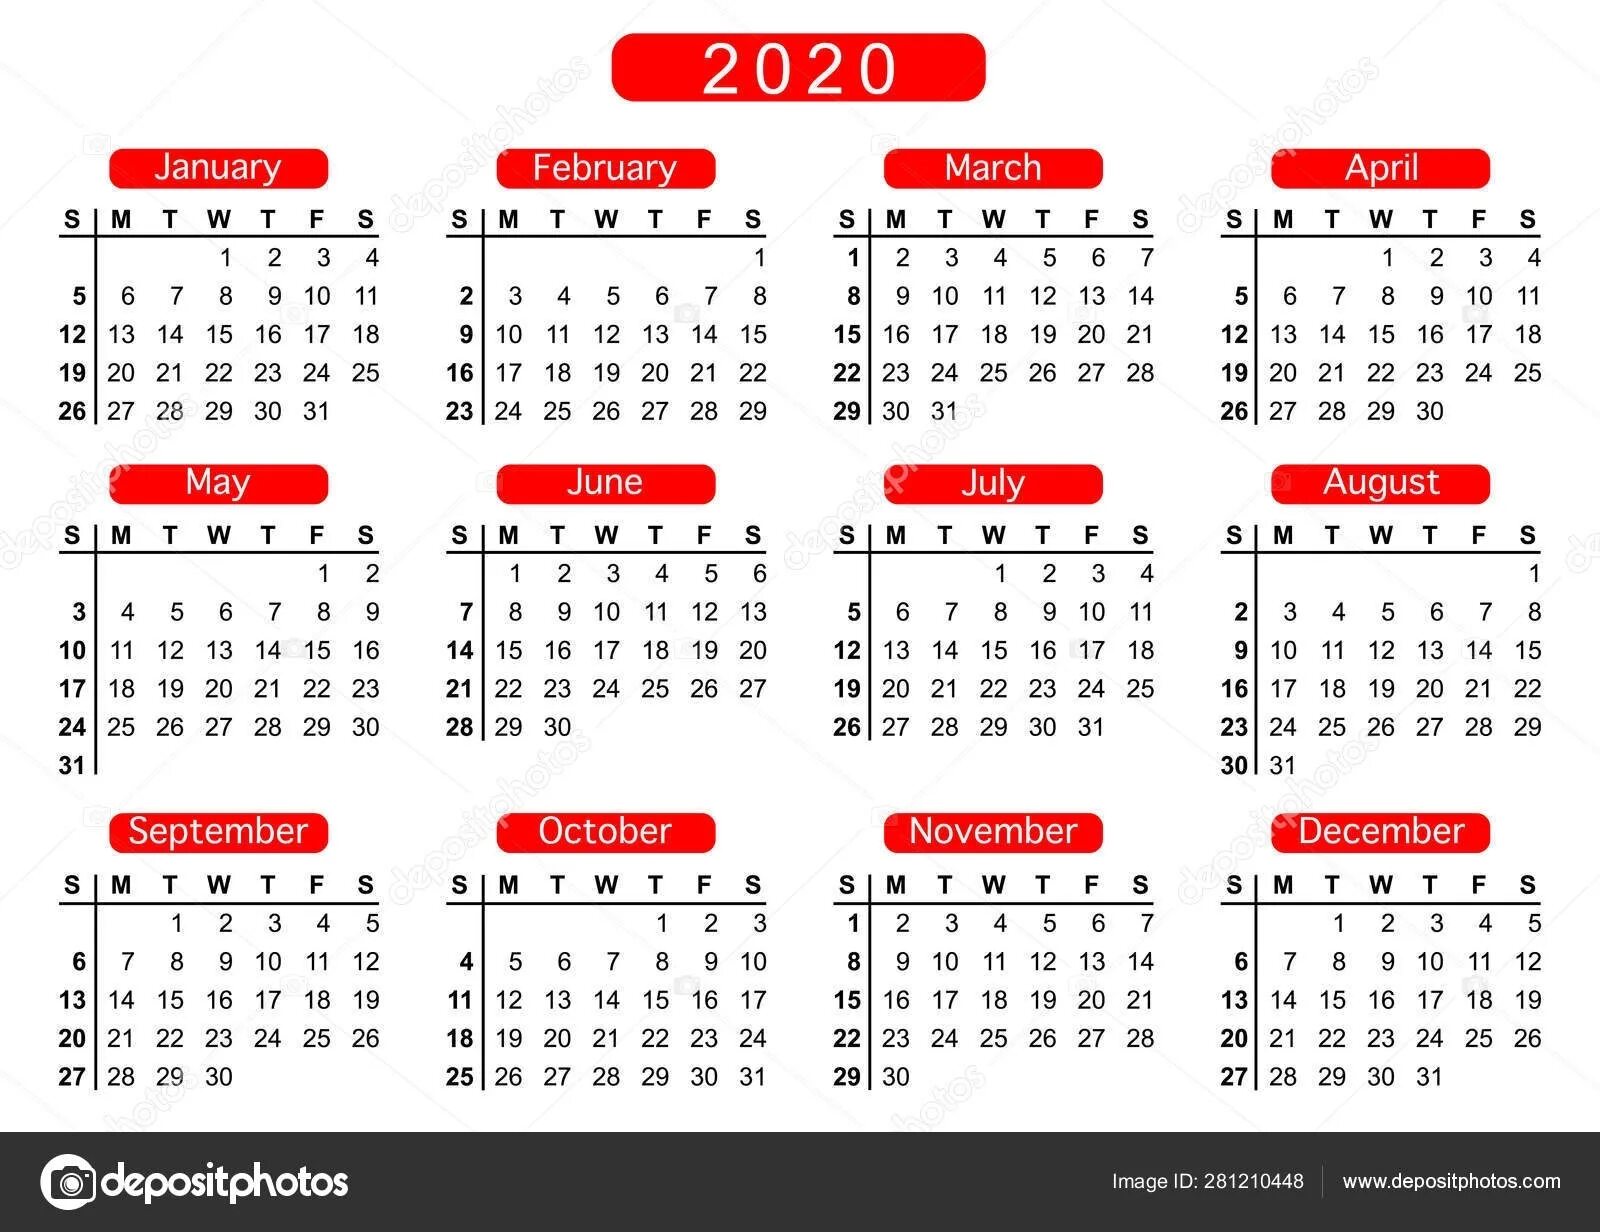 Даты недель 2020. Календарь 2020 с неделями. Календарь недель 2020. Календарь 2020 с номерами недель. Номера недель 2020.